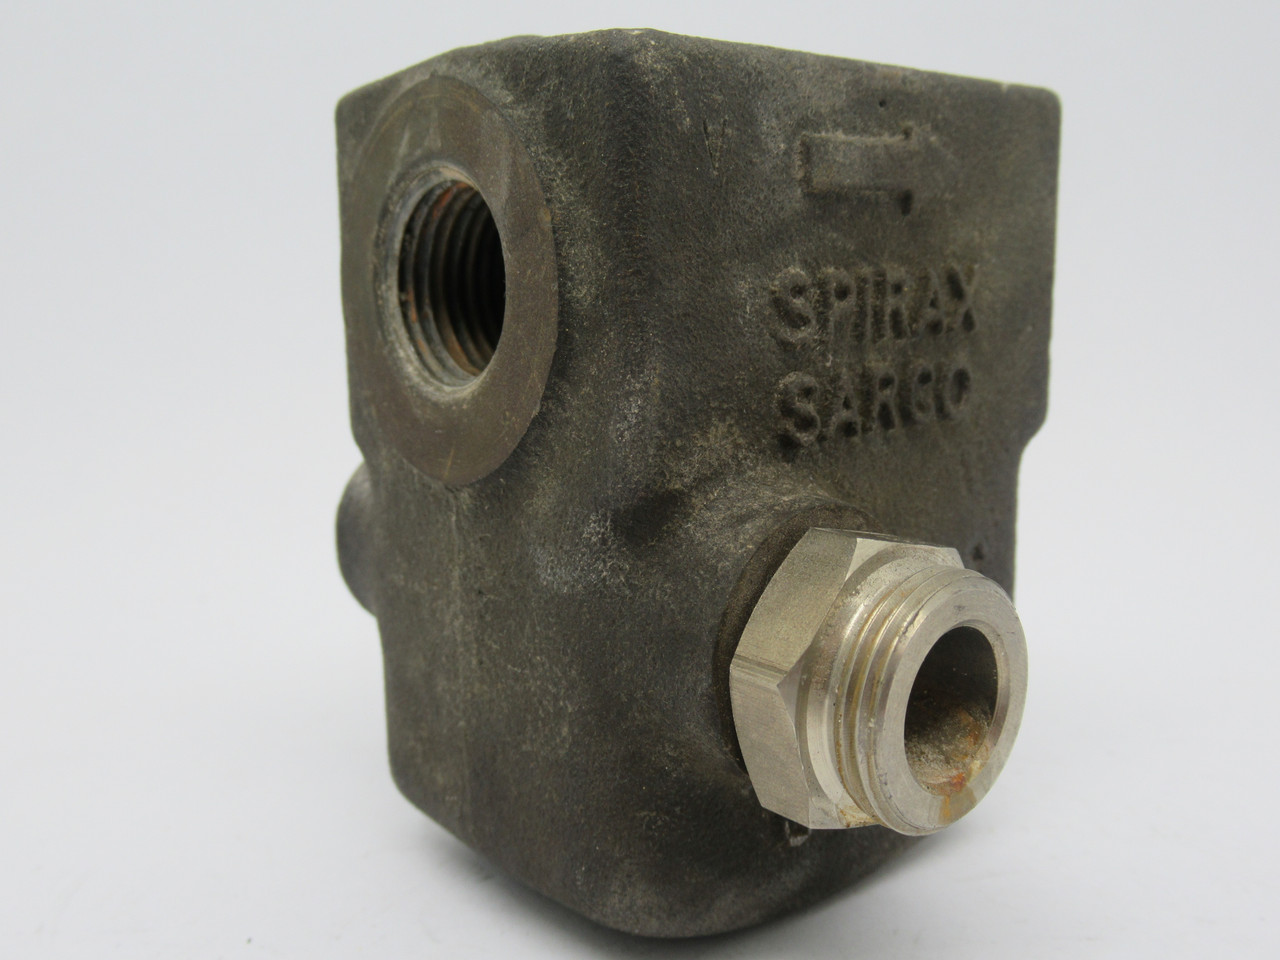 Spirax Sarco ST17 Sensor Chamber 32 Bar 240C 1/2" NPT USED